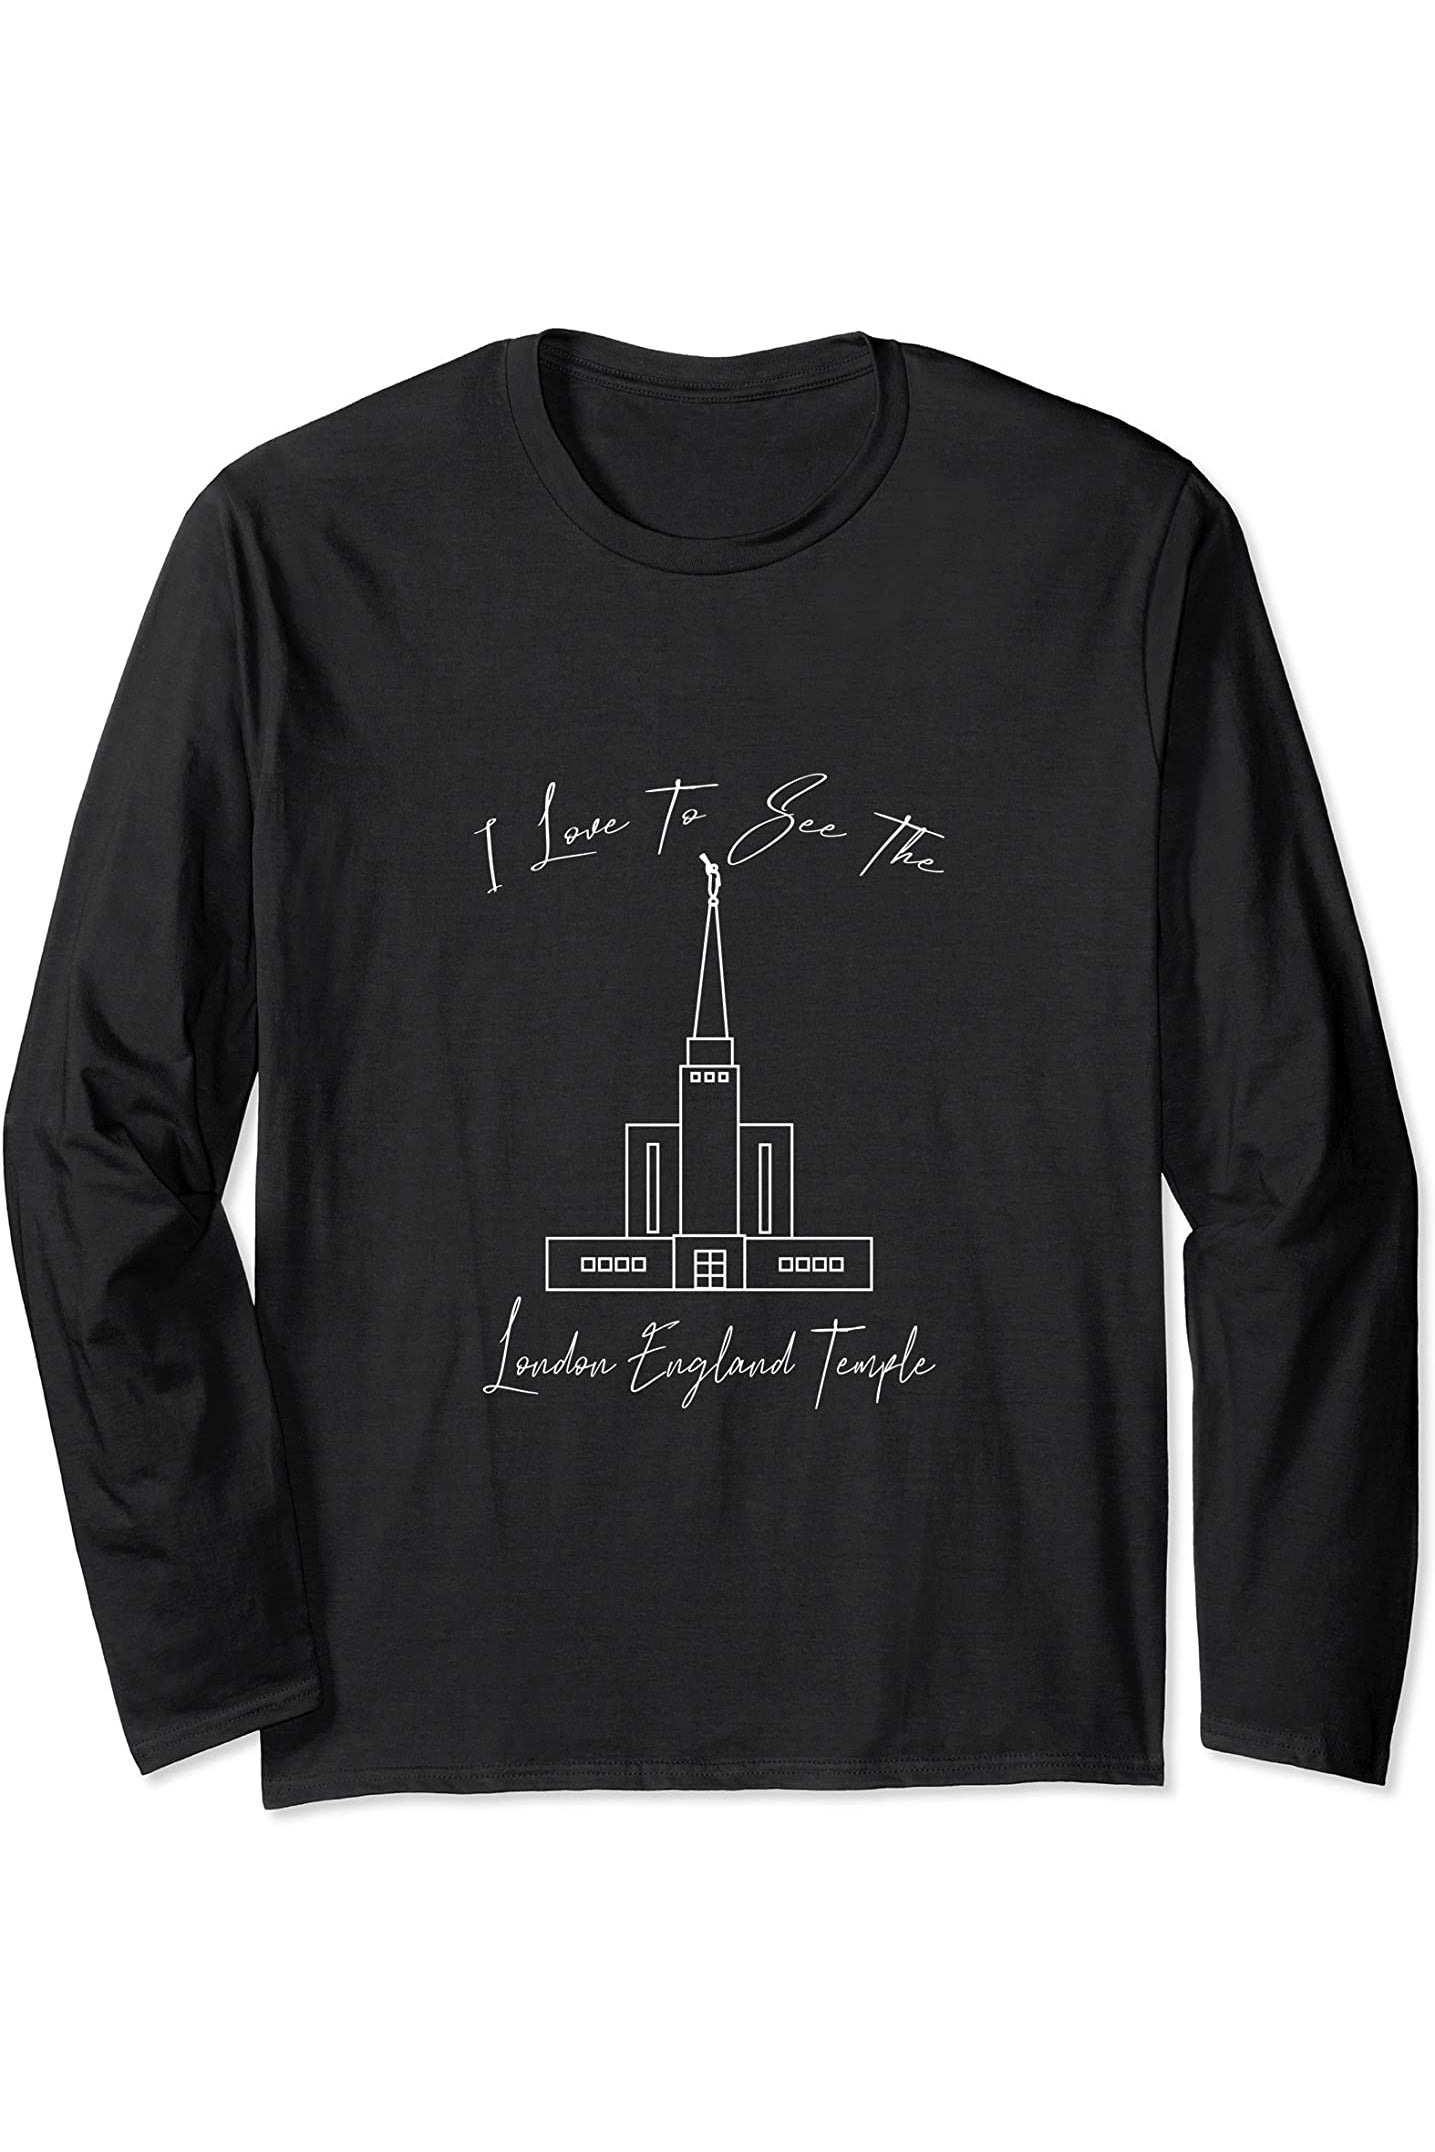 London England Temple Long Sleeve T-Shirt - Calligraphy Style (English) US